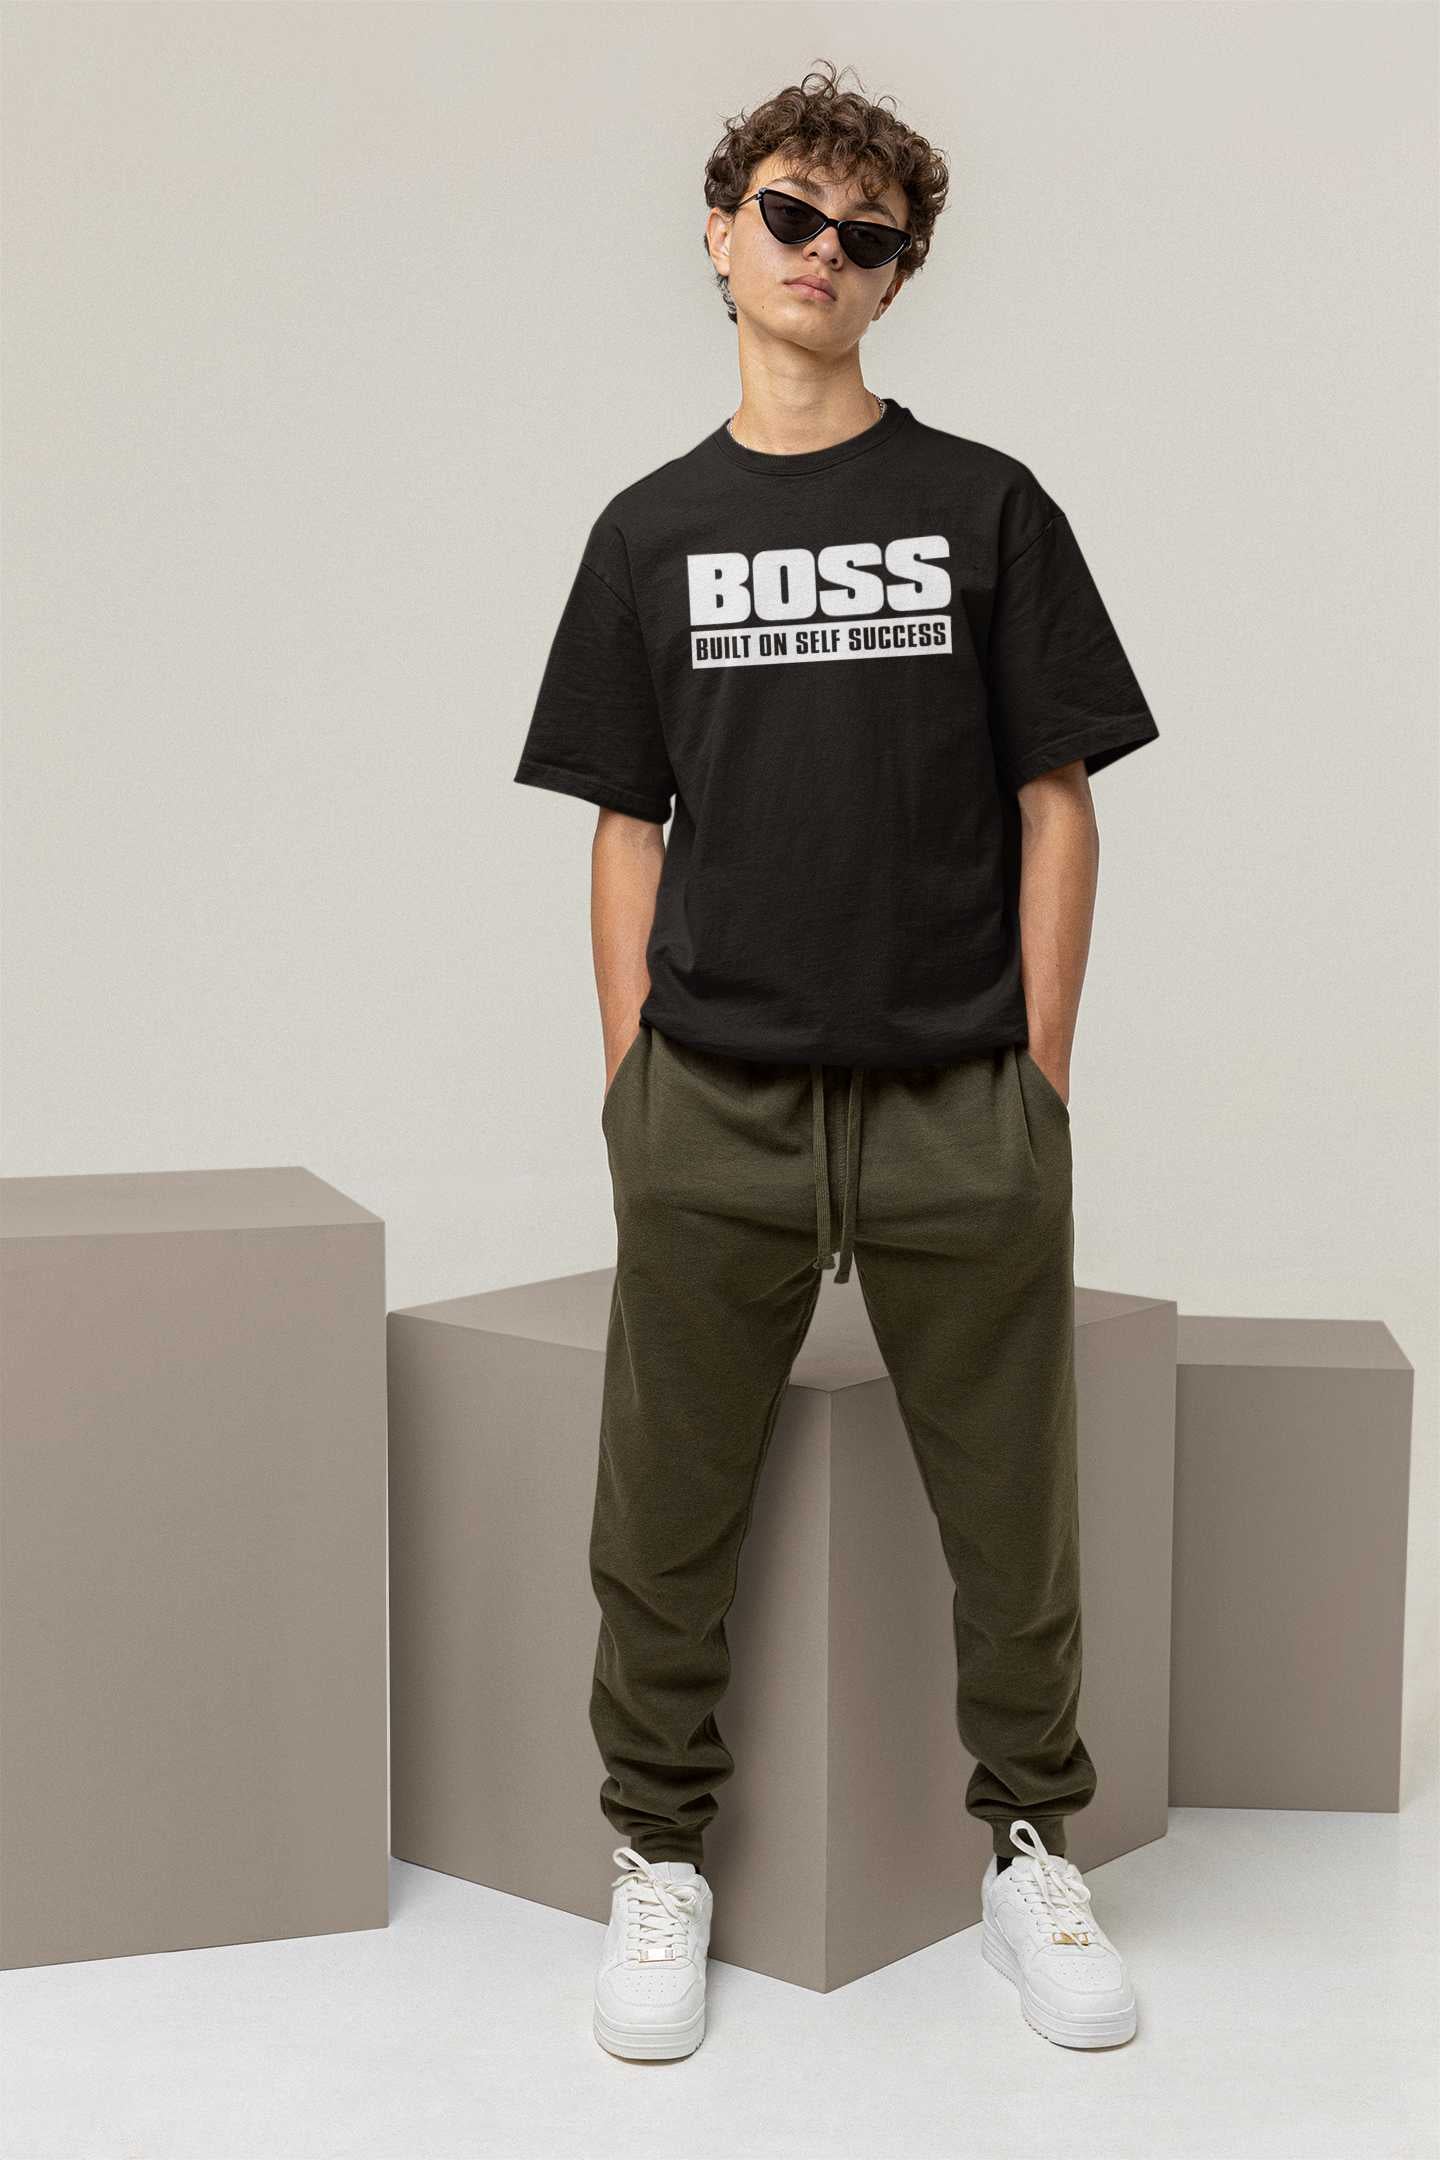 BOSS - Oversized T Shirt Strong Soul Shirts & Tops